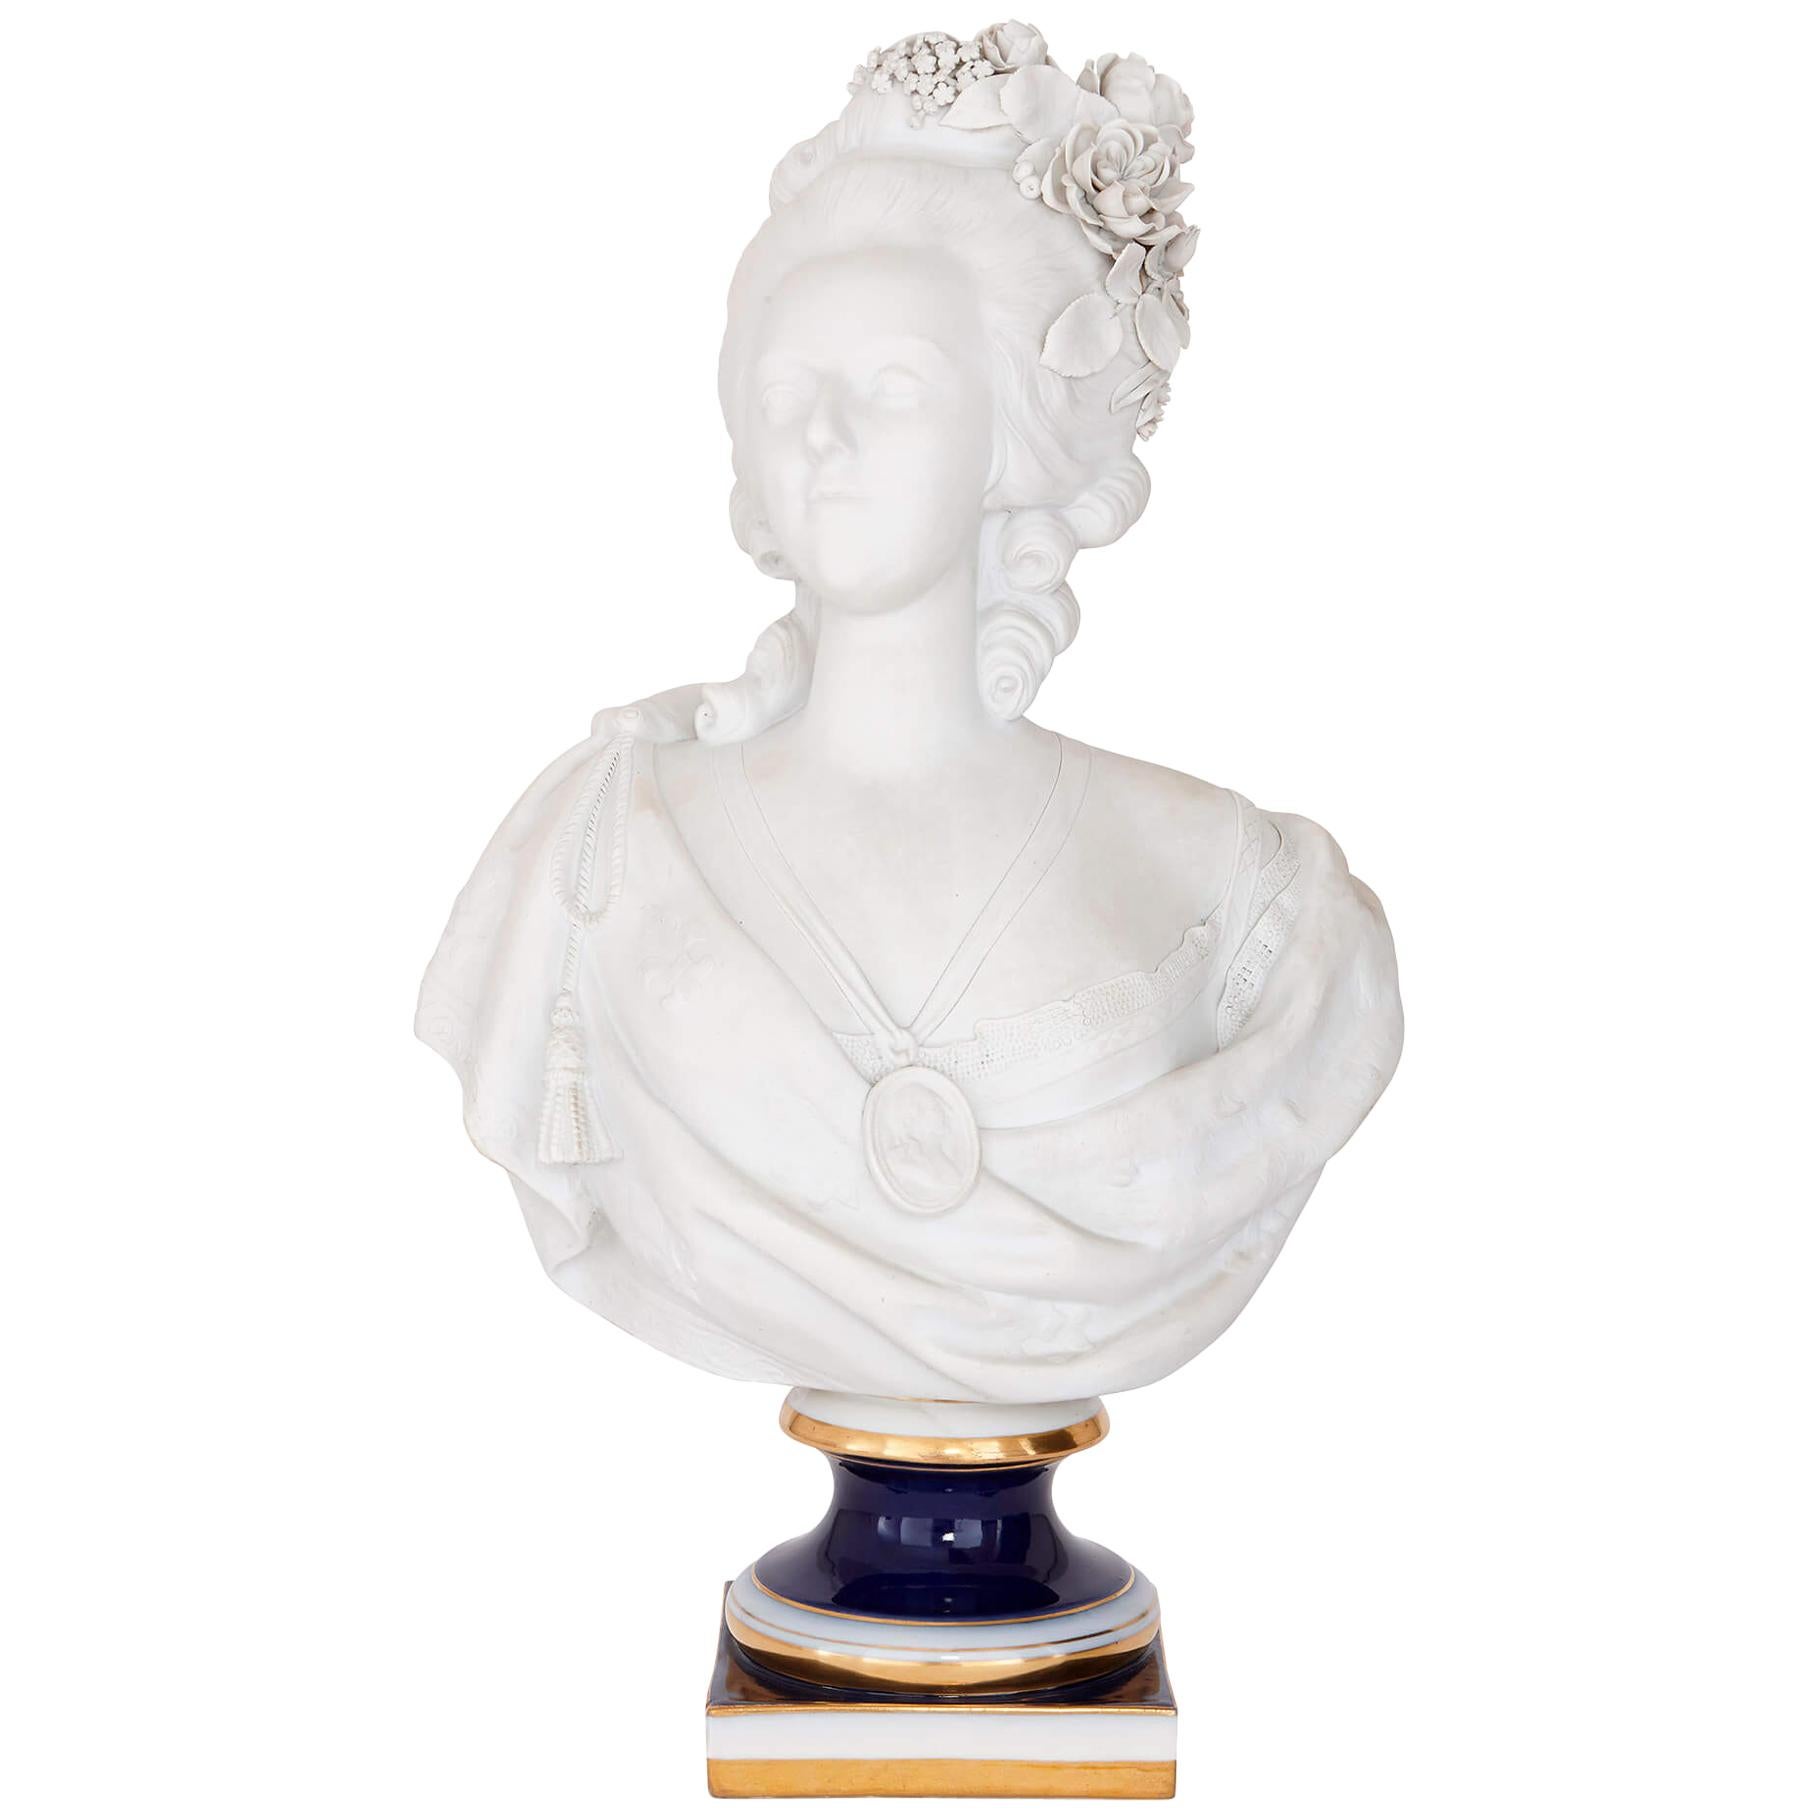 Ancienne figurine en porcelaine biscuit de la reine Marie-Antoinette